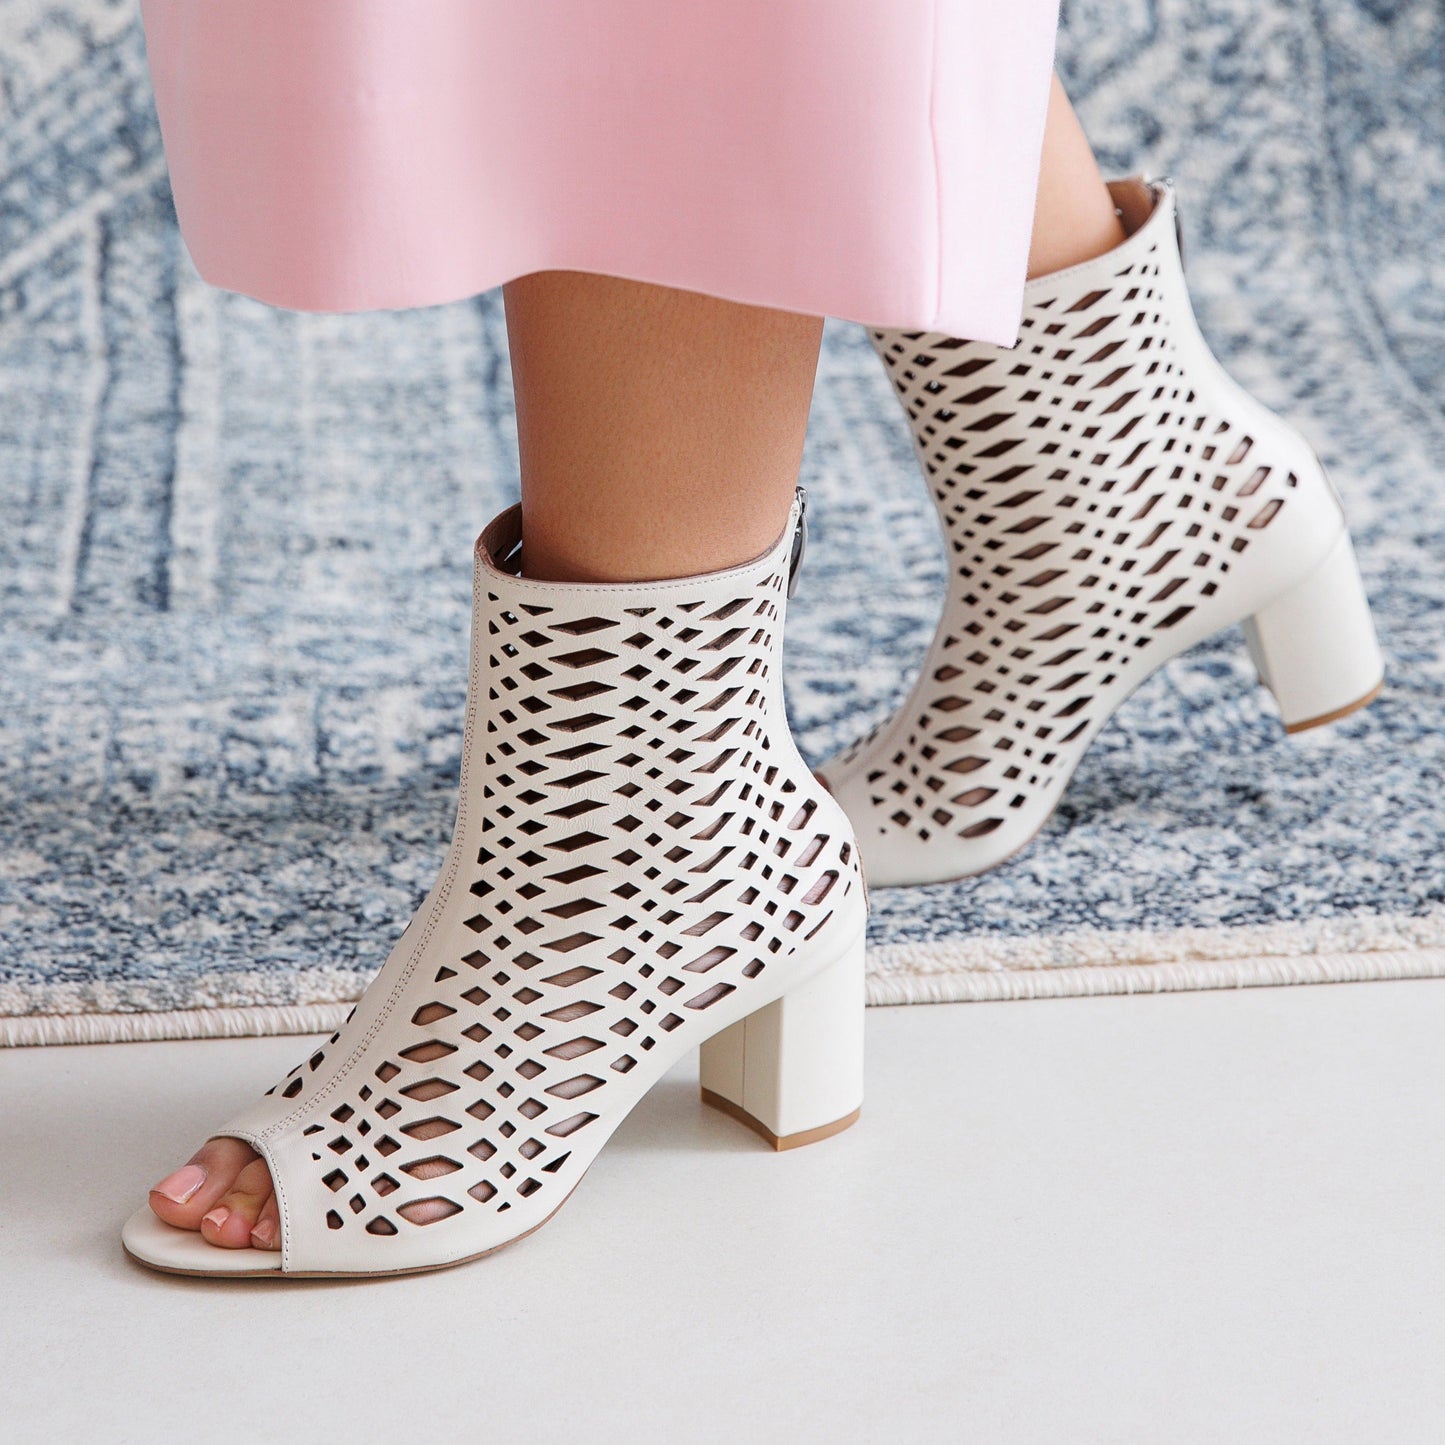 Kayan cream heel - Heels - kuwait - Ksa- shoes